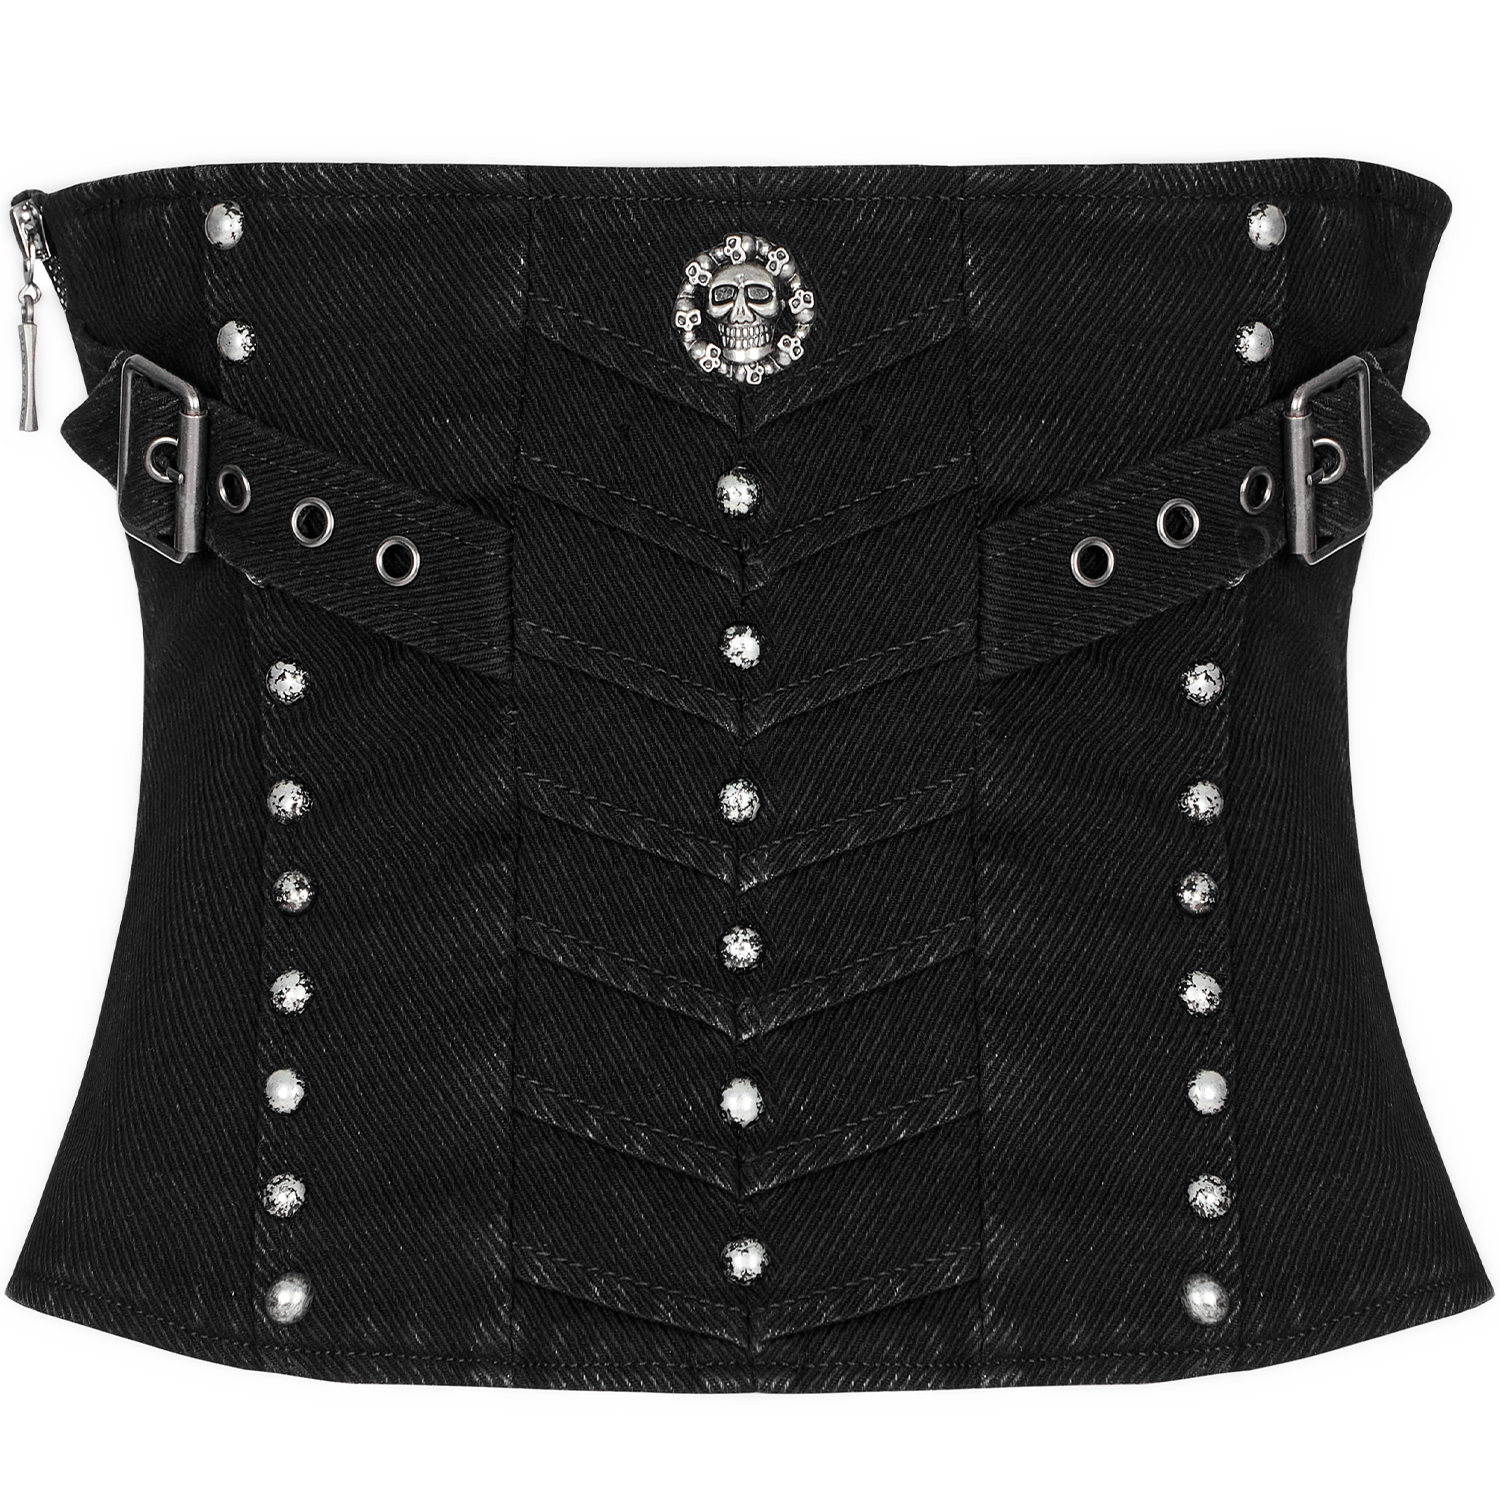 Steampunk Corset Belt, Vintage Decorative Belt for Women, Black